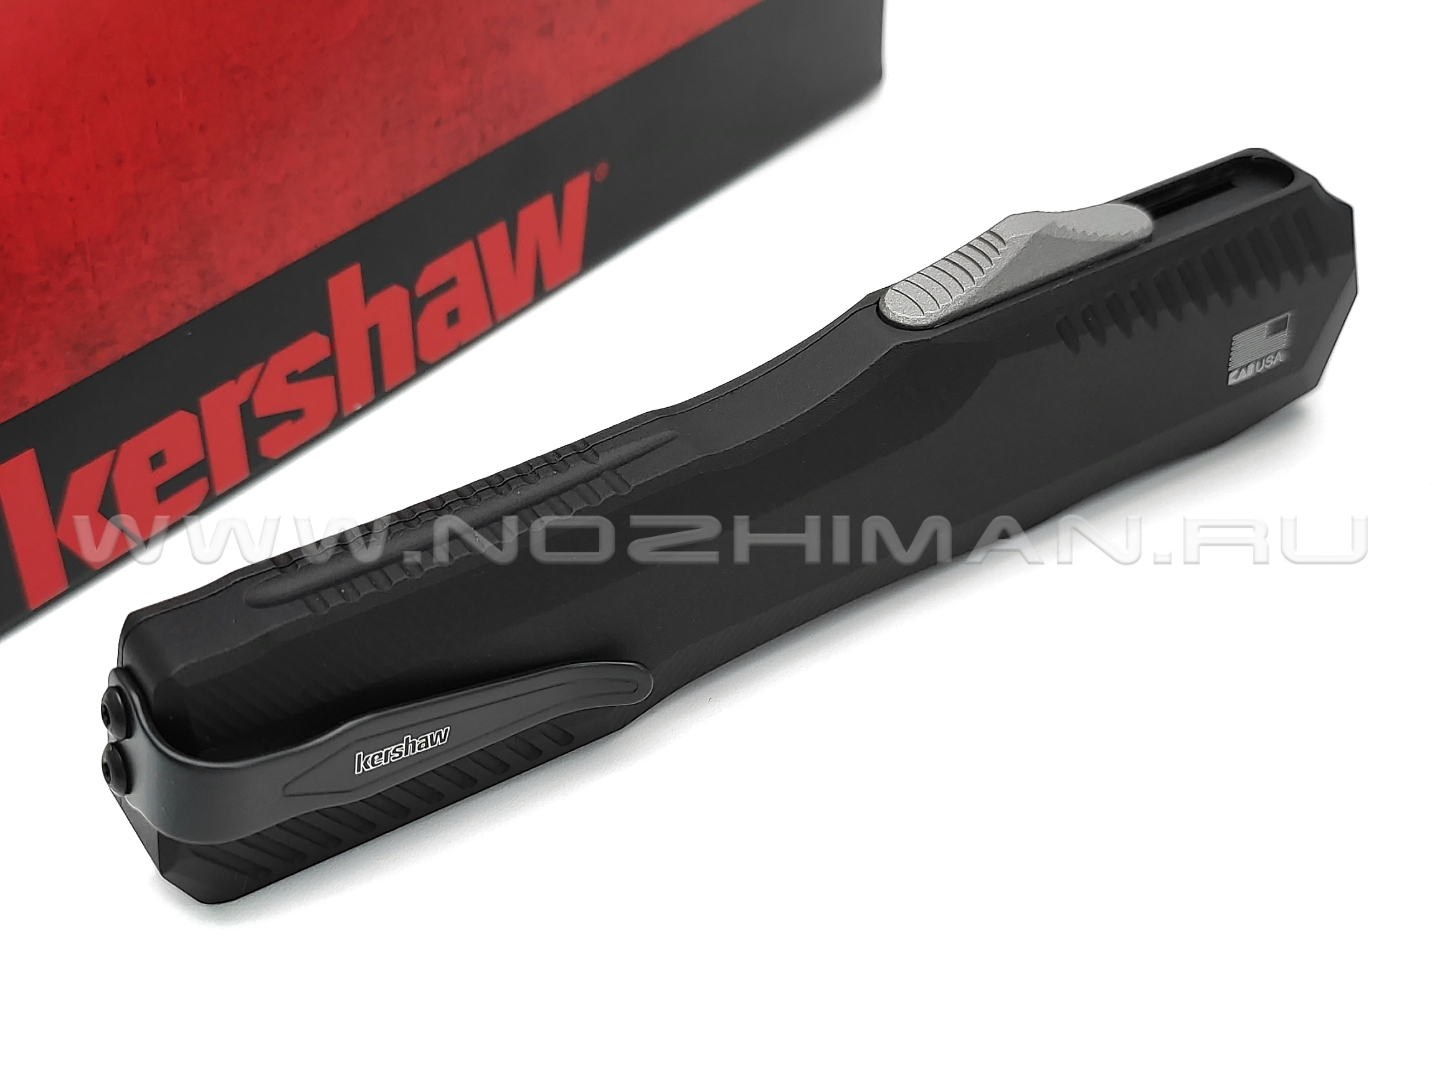 Нож Kershaw Livewire 9000 сталь CPM 20CV, рукоять 6061-T6 Aluminum